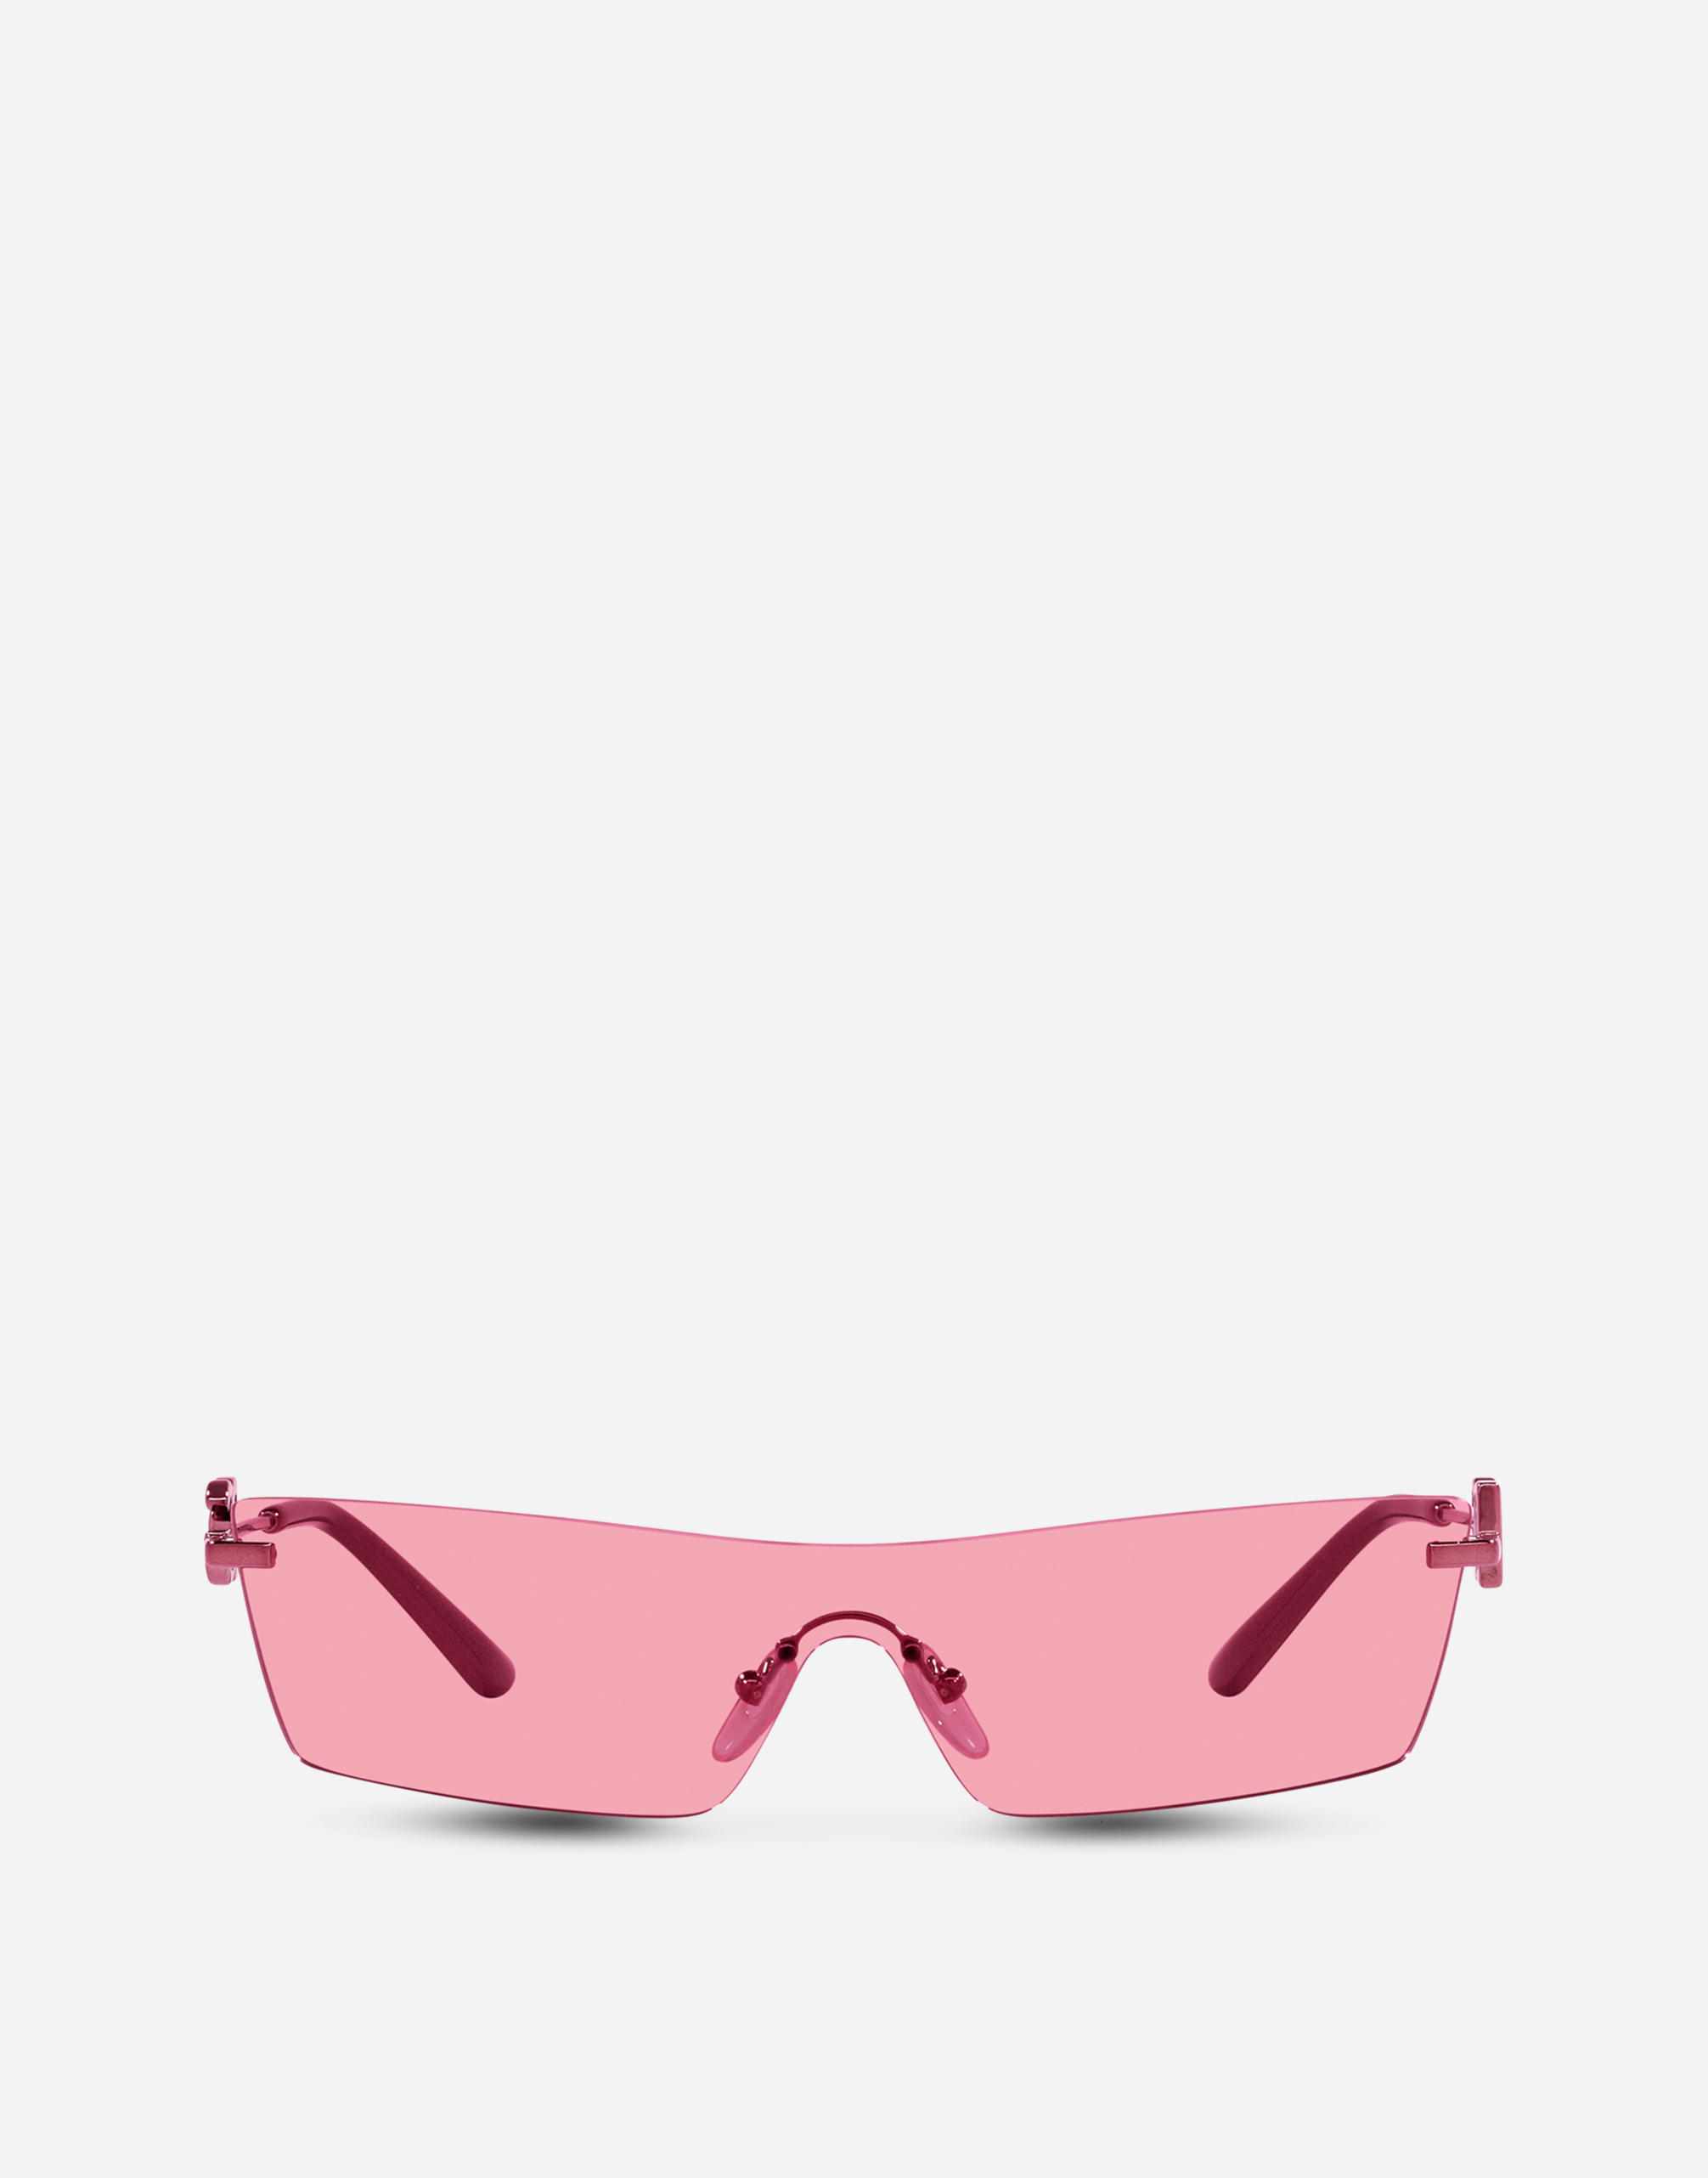 DG Light Sunglasses in Pink